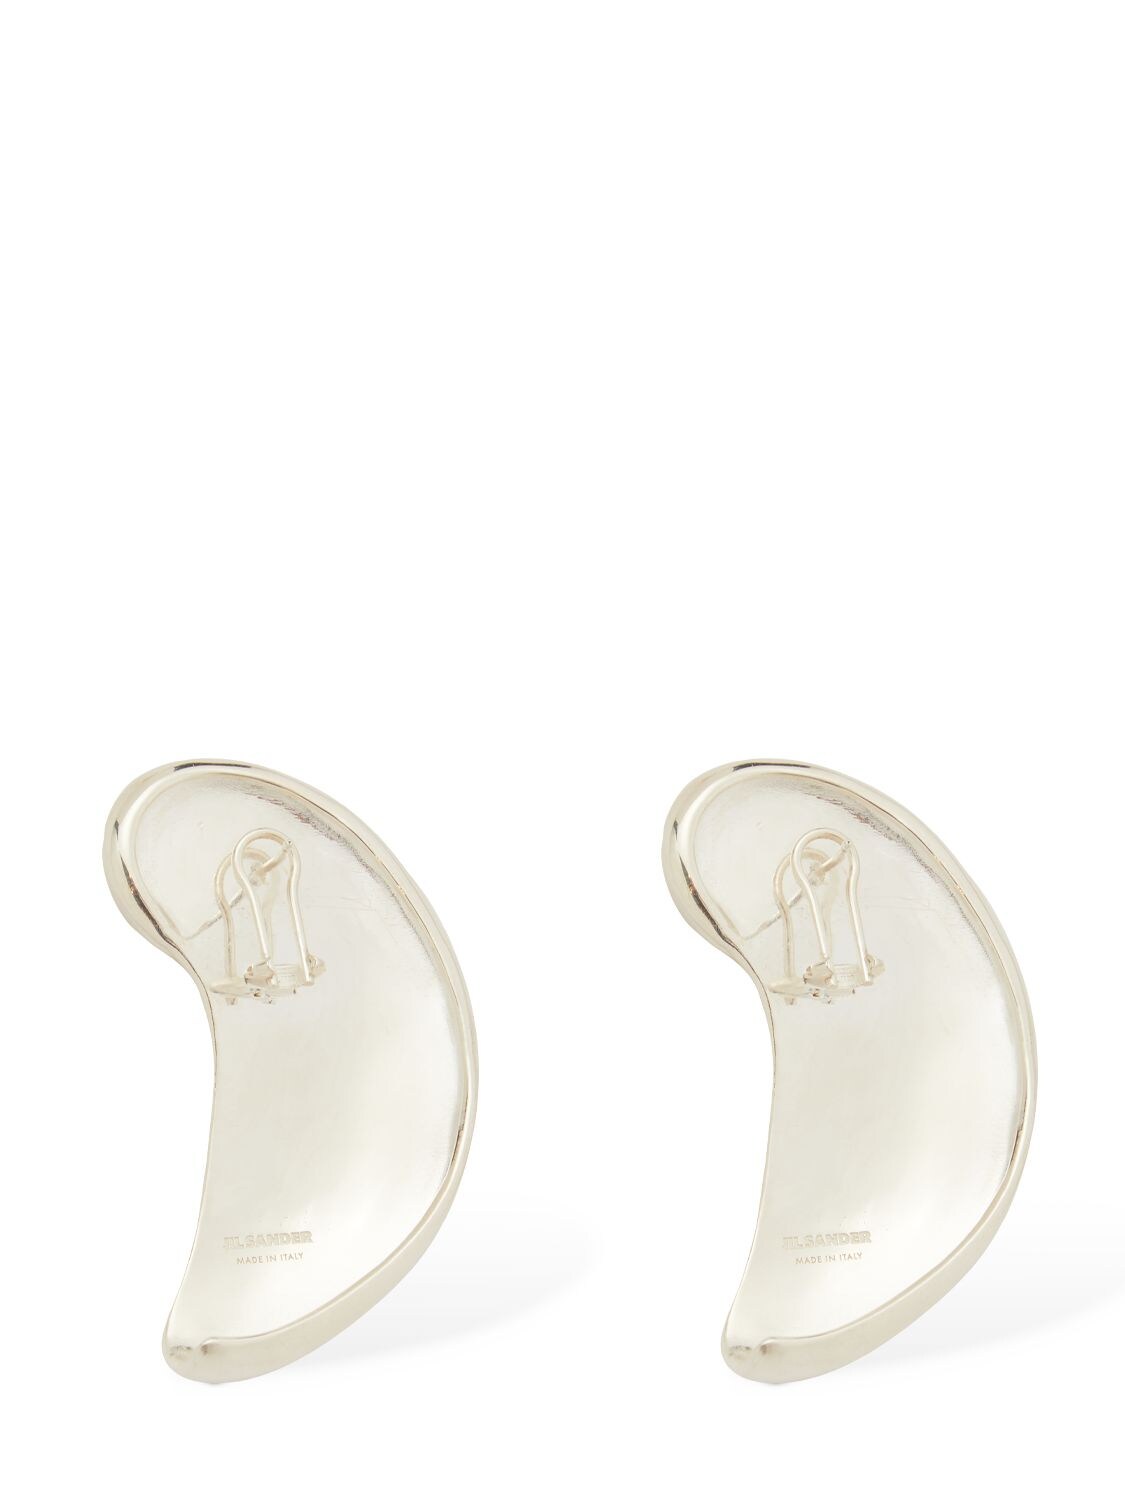 Jil Sander Connections 1 Stud Earrings In Silver | ModeSens